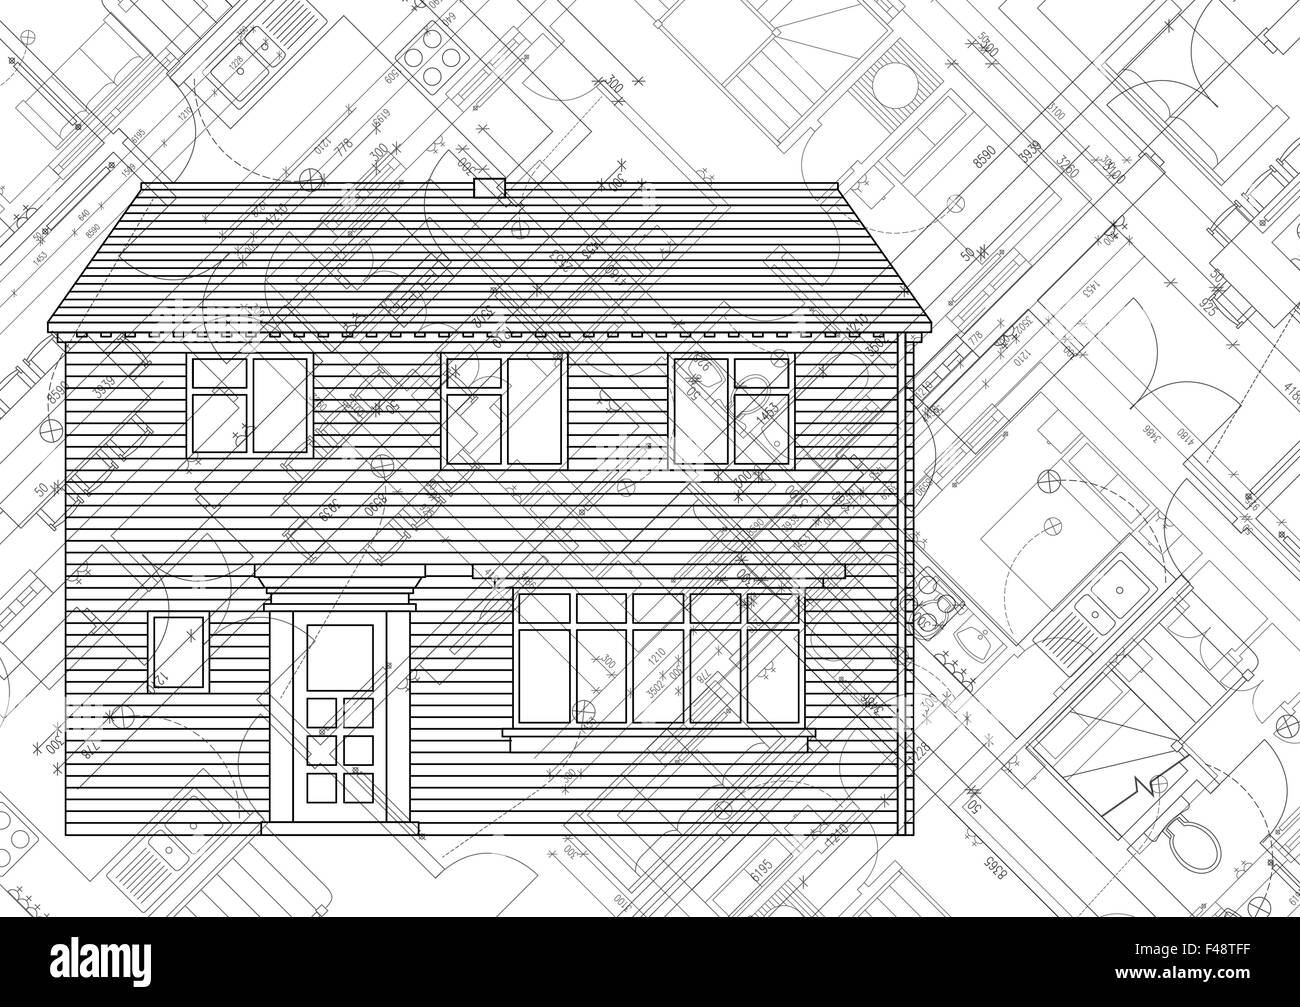 Blueprint Plan Of 3 Bedroom House Stock Photo 88705331 Alamy